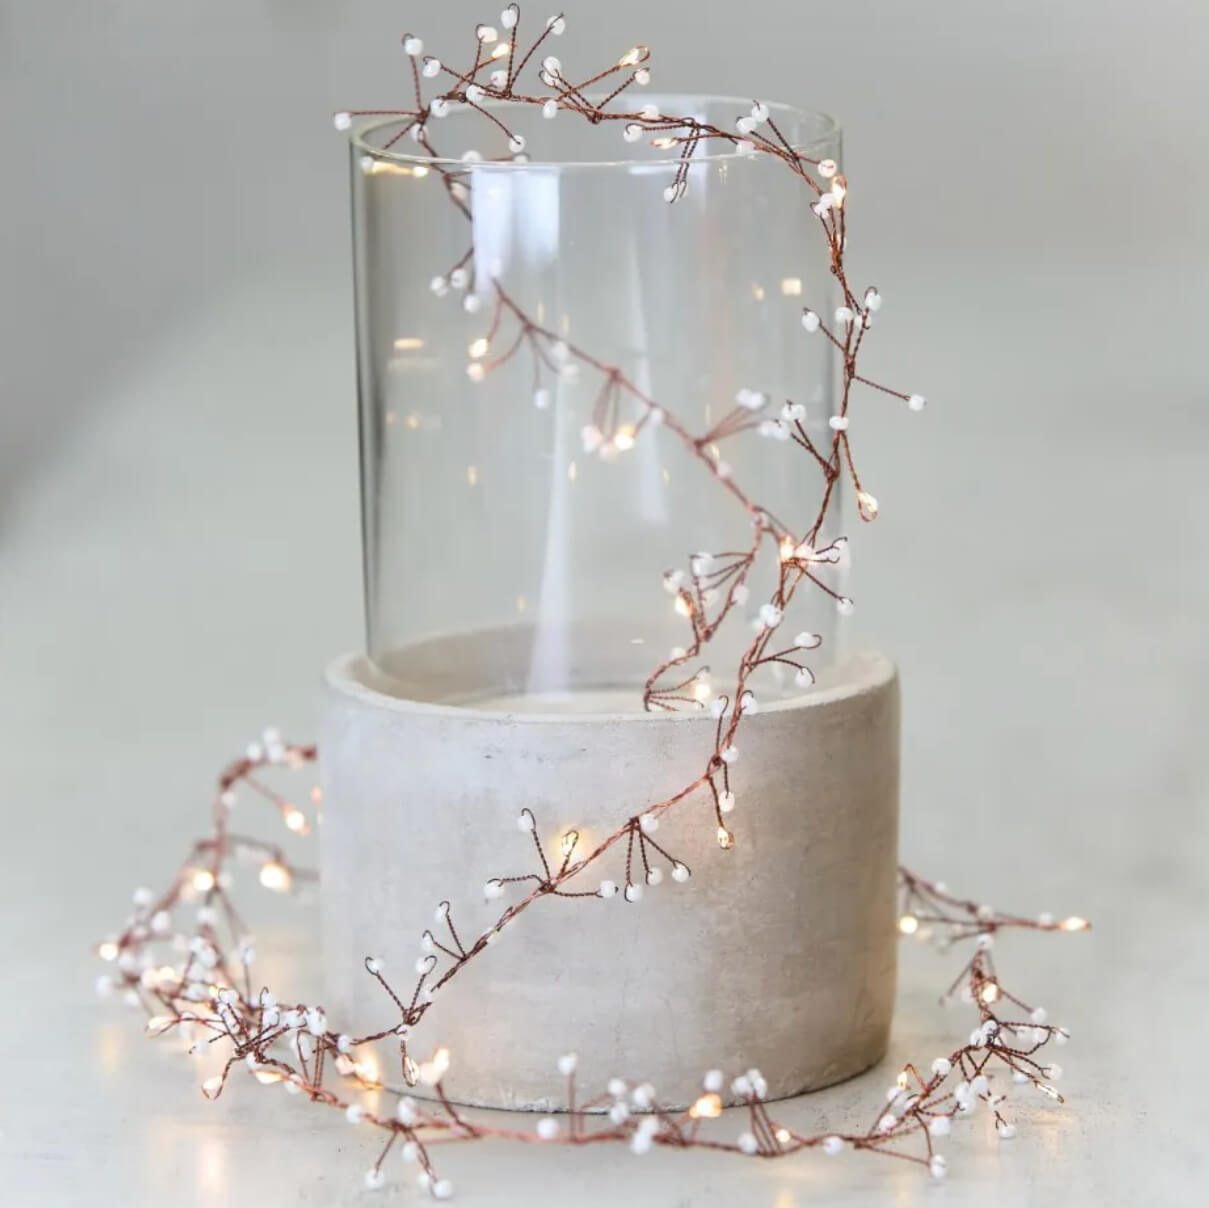 Jewel Light Chain - LED fairy lights wrapped around a lantern